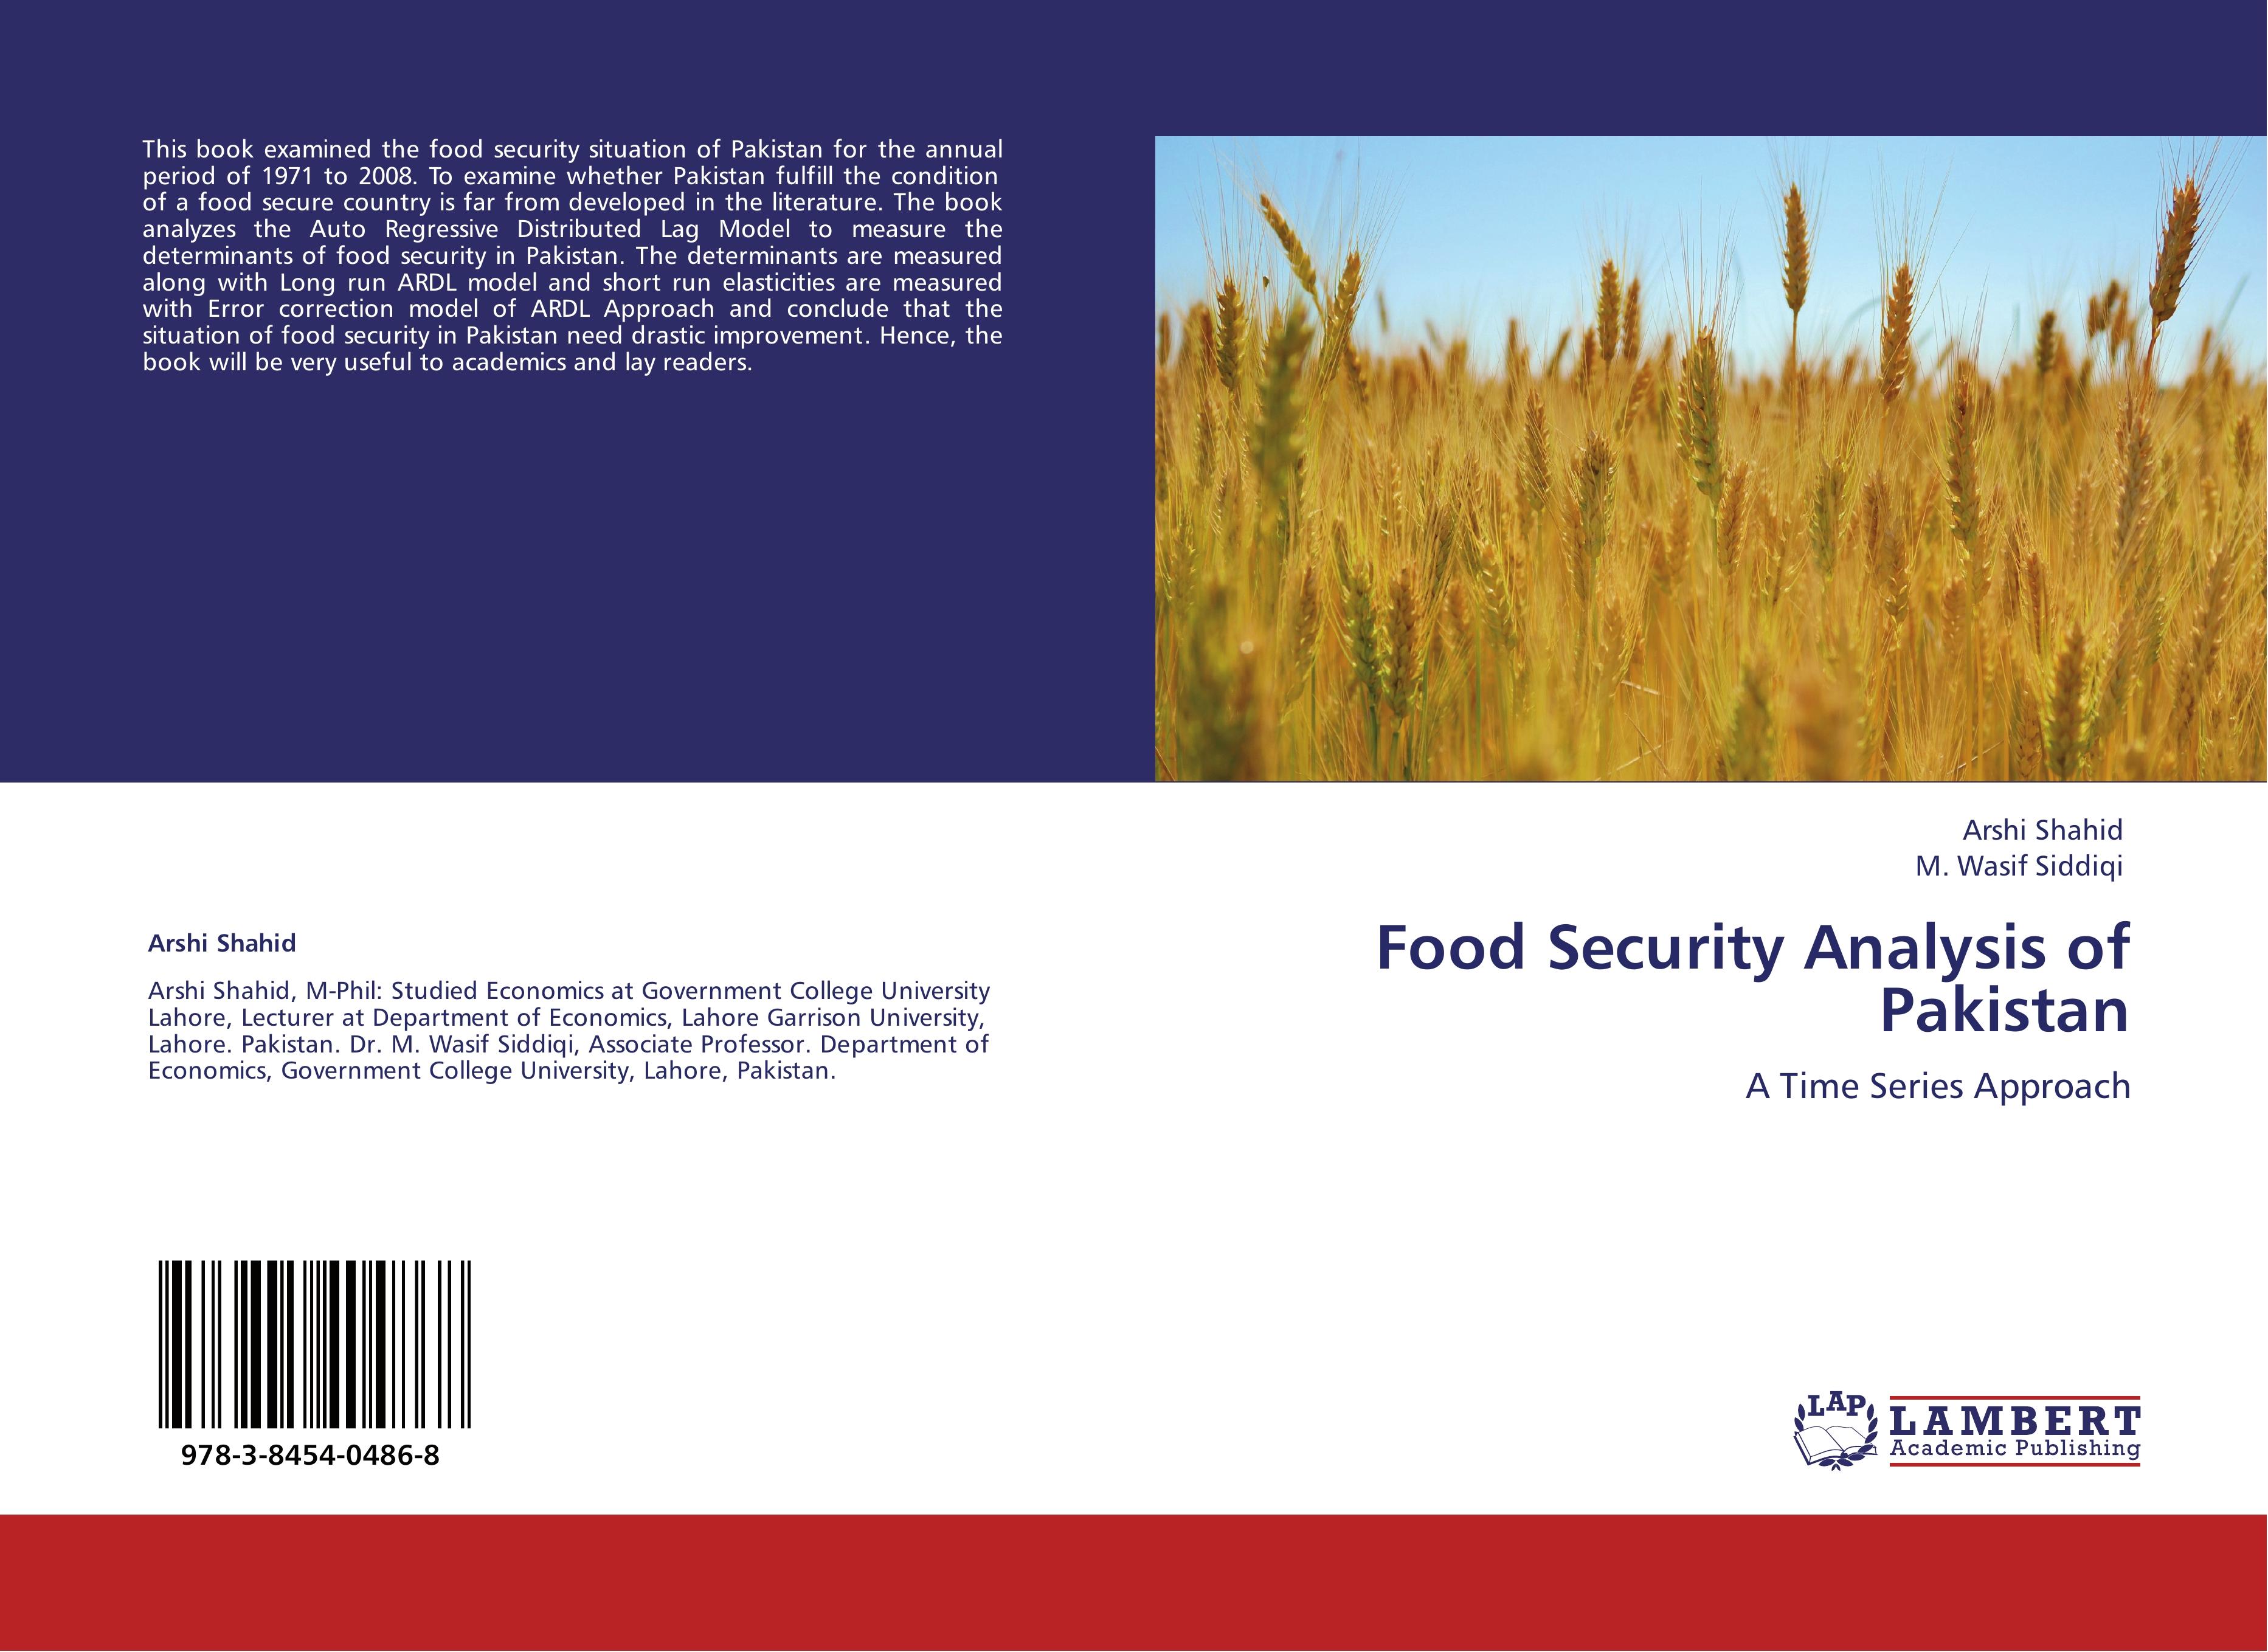 Food Security Analysis of Pakistan - Arshi Shahid M. Wasif Siddiqi